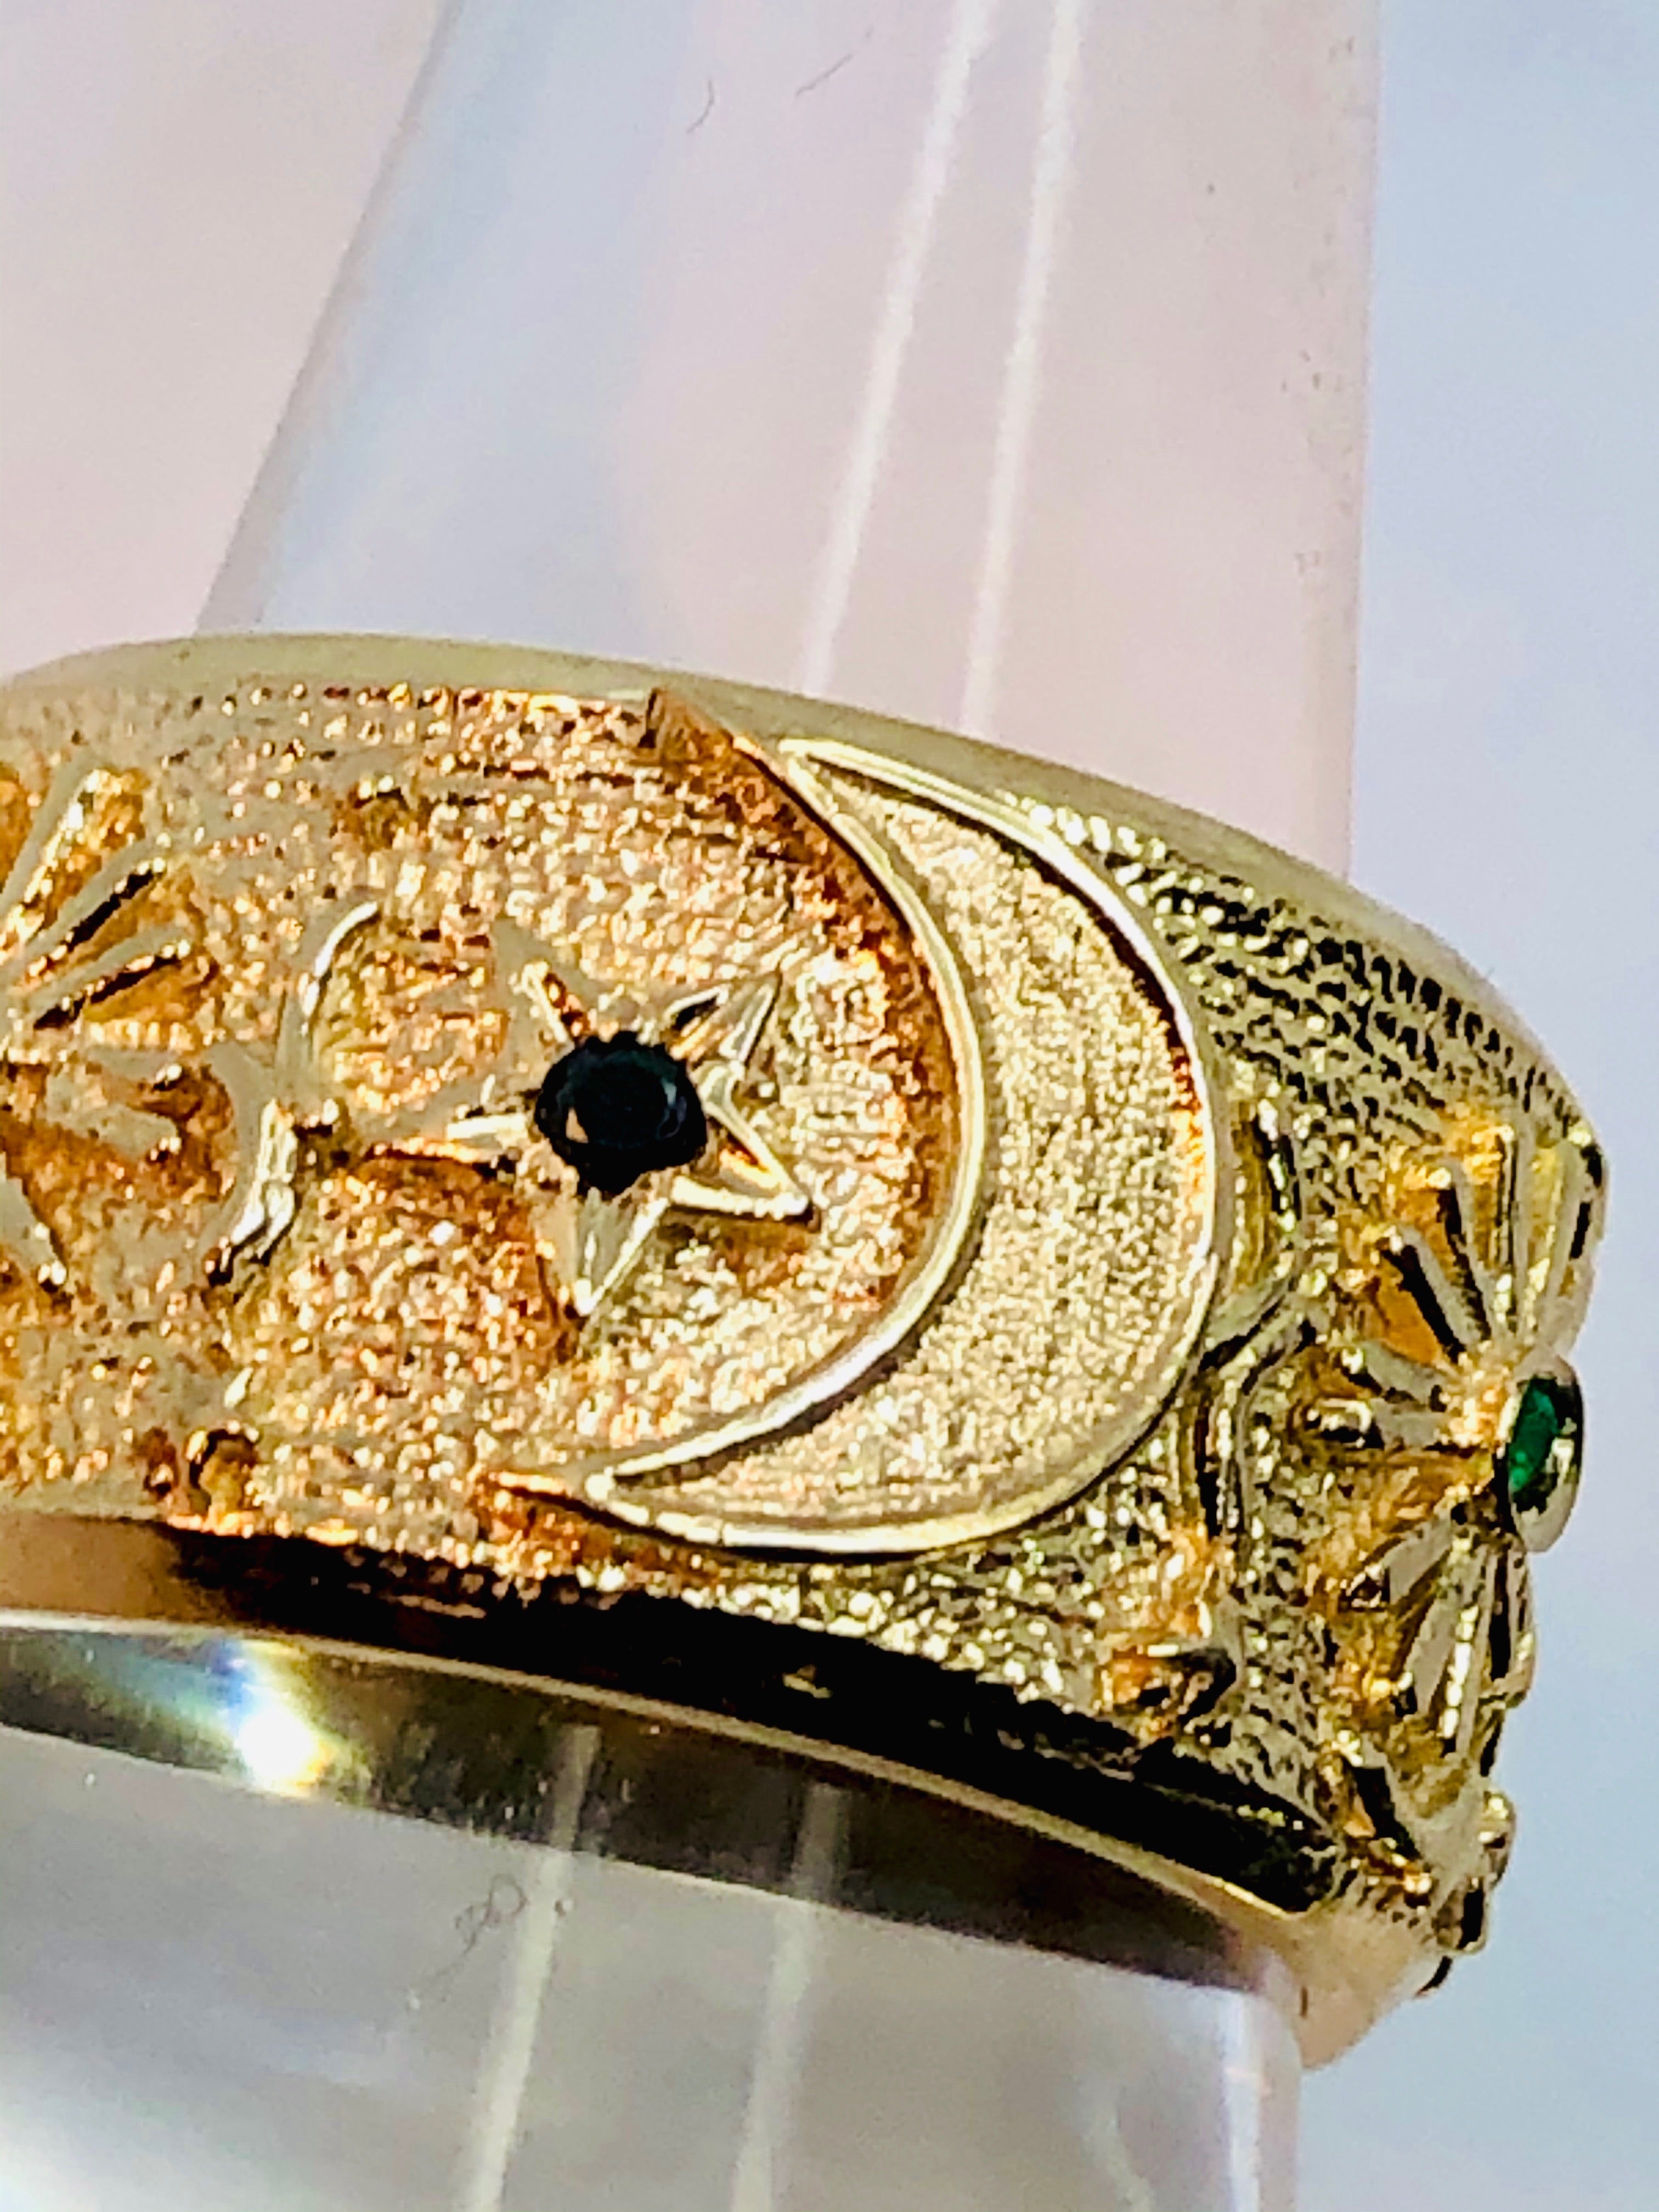 Black star CrownZ ring